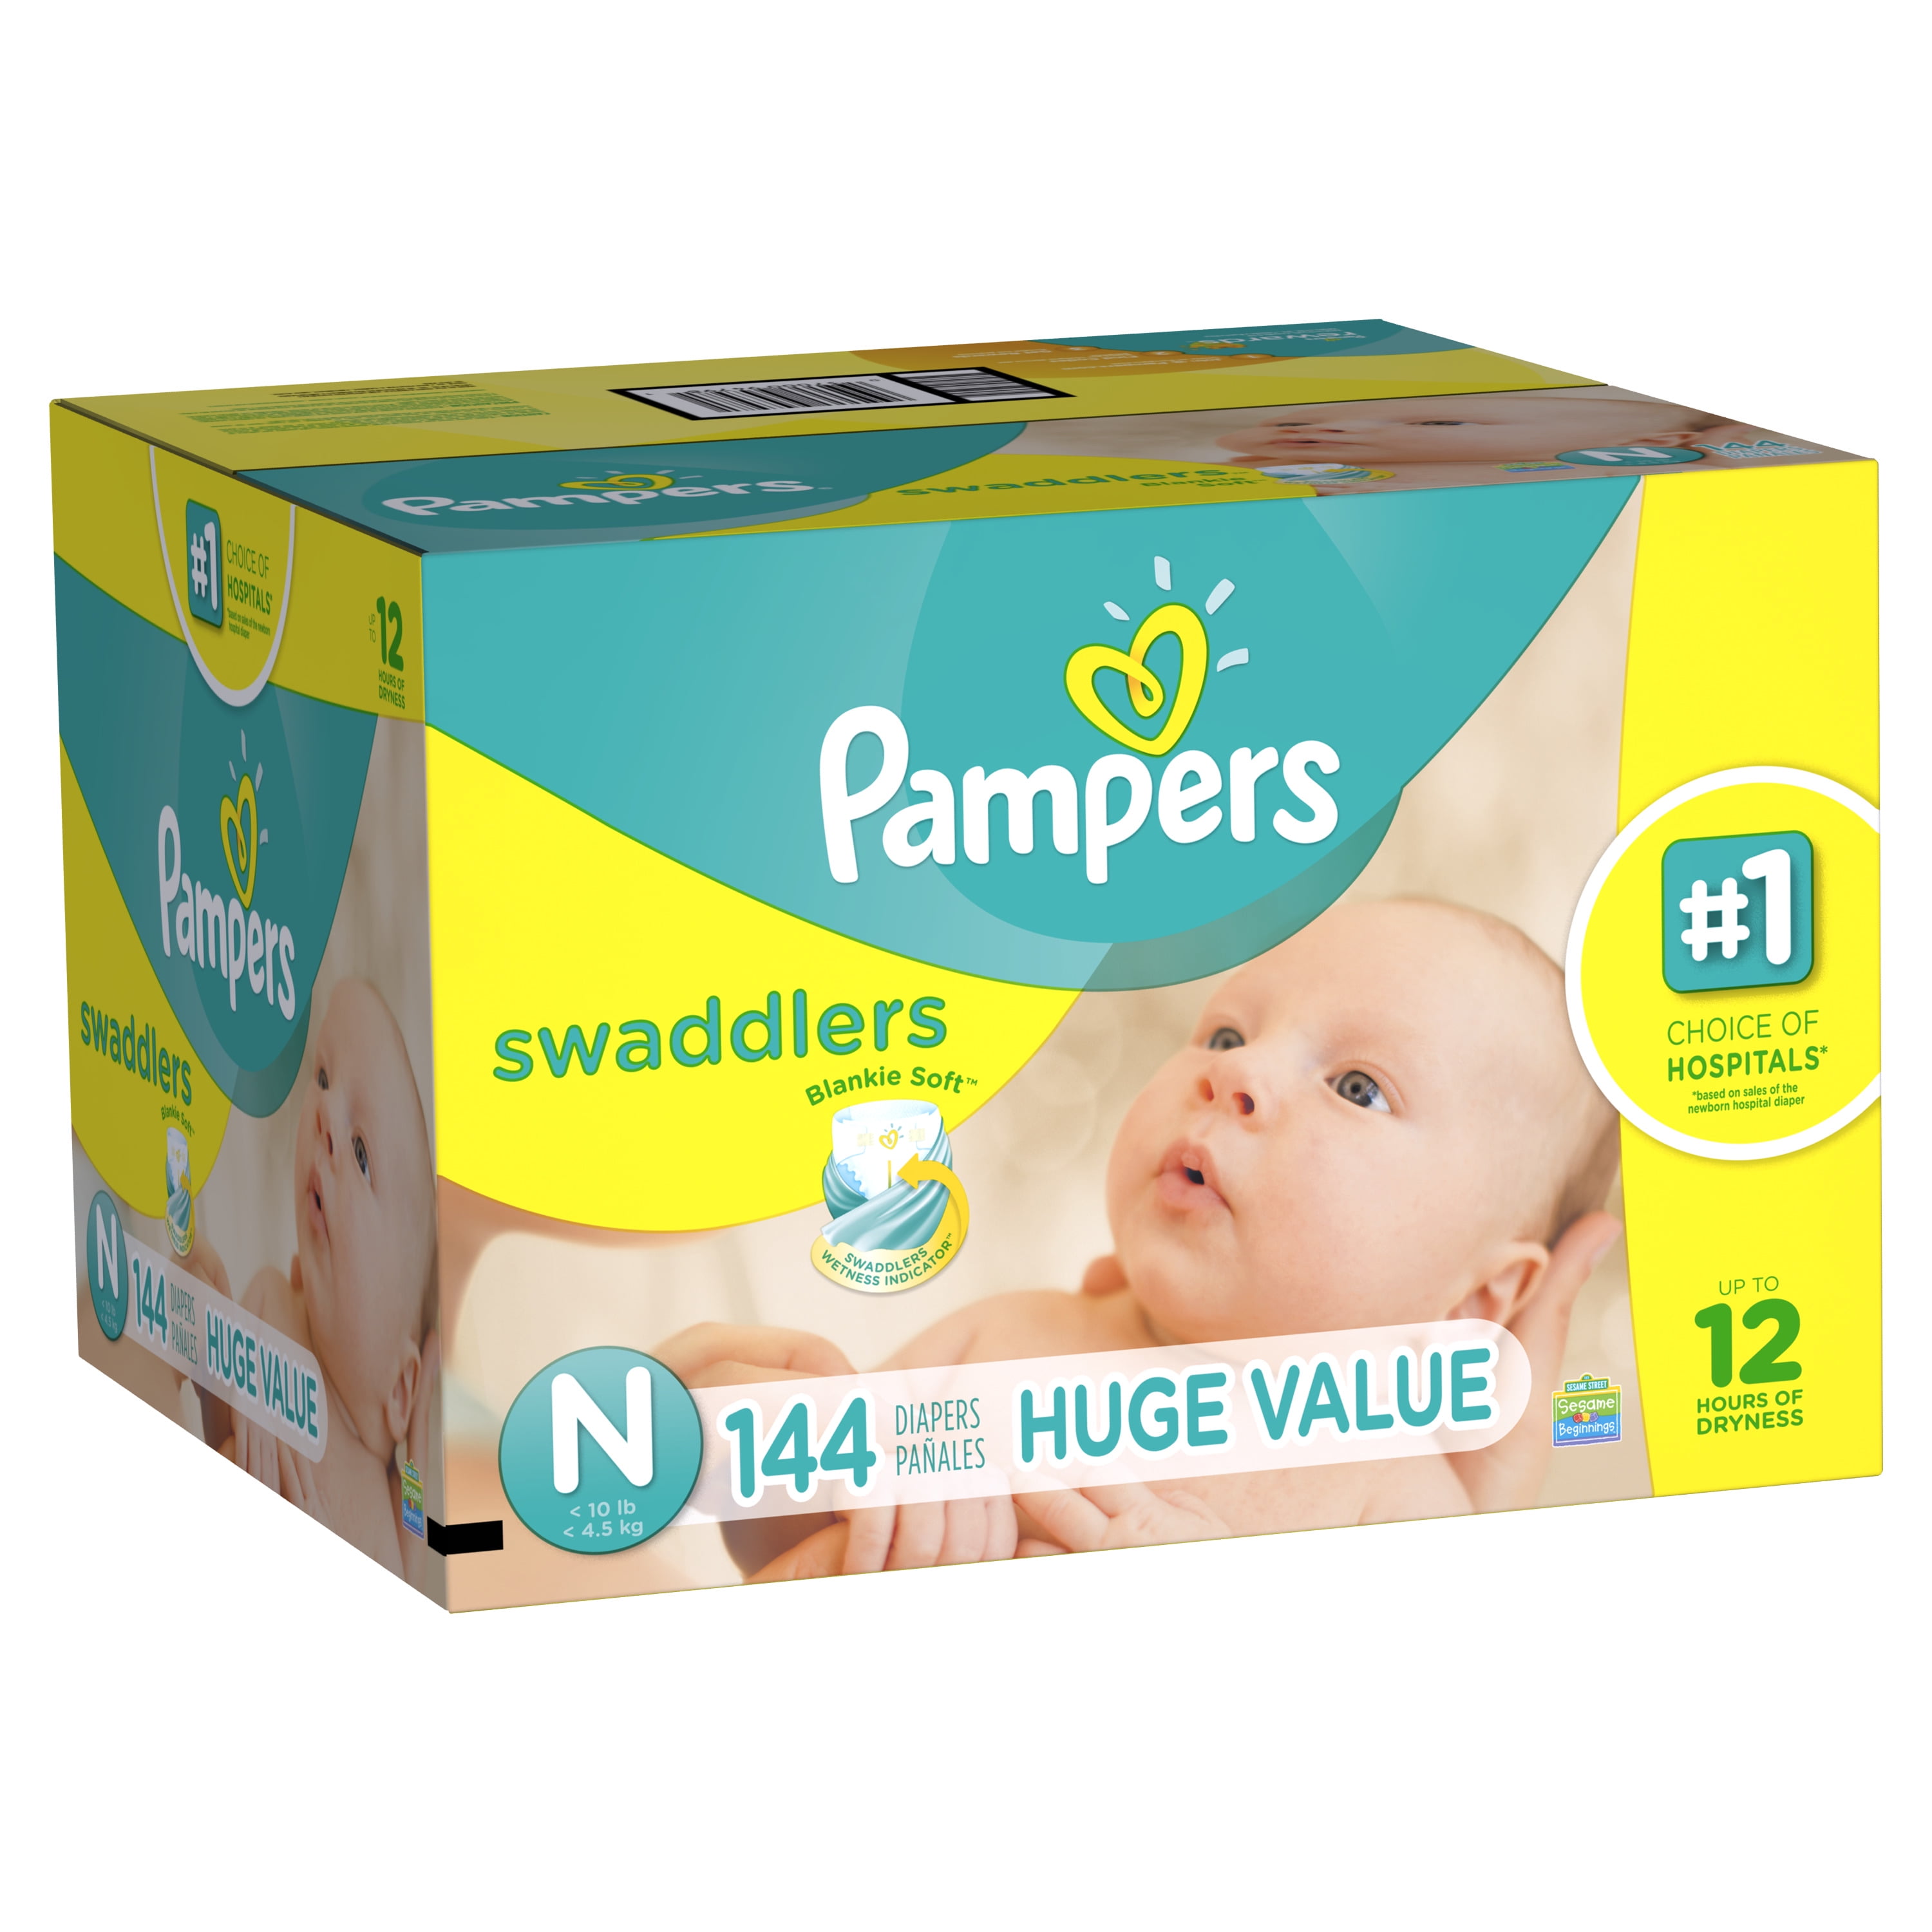 Pampers Harmonie Baby Diapers, No 4, 9-14kg, 28 Diapers. - Babyboum